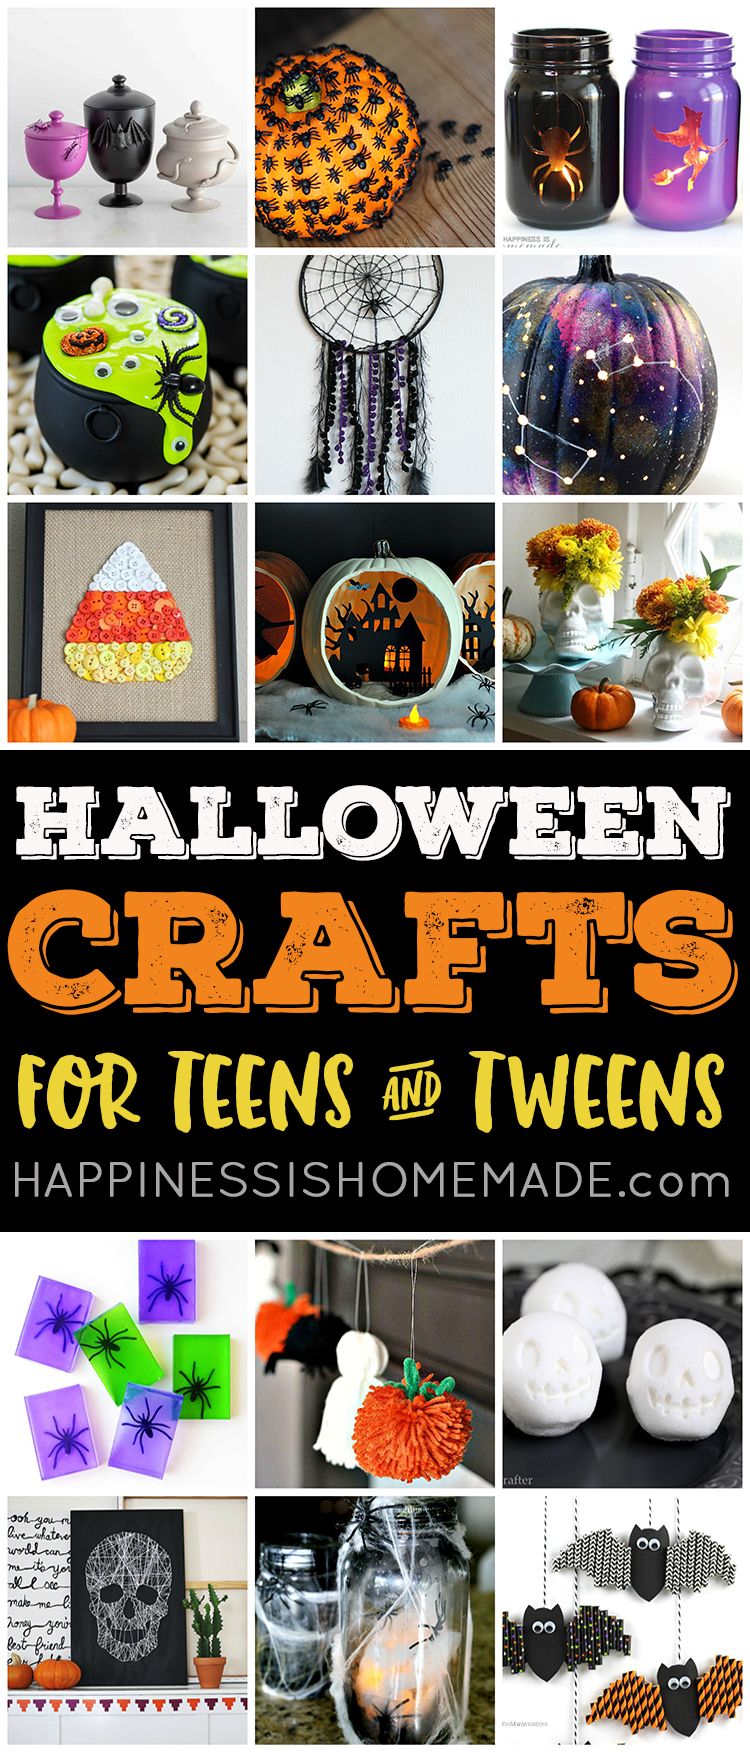 https://www.happinessishomemade.net/wp-content/uploads/2017/10/Easy-Halloween-Crafts-for-Teens-and-Tweens.jpg